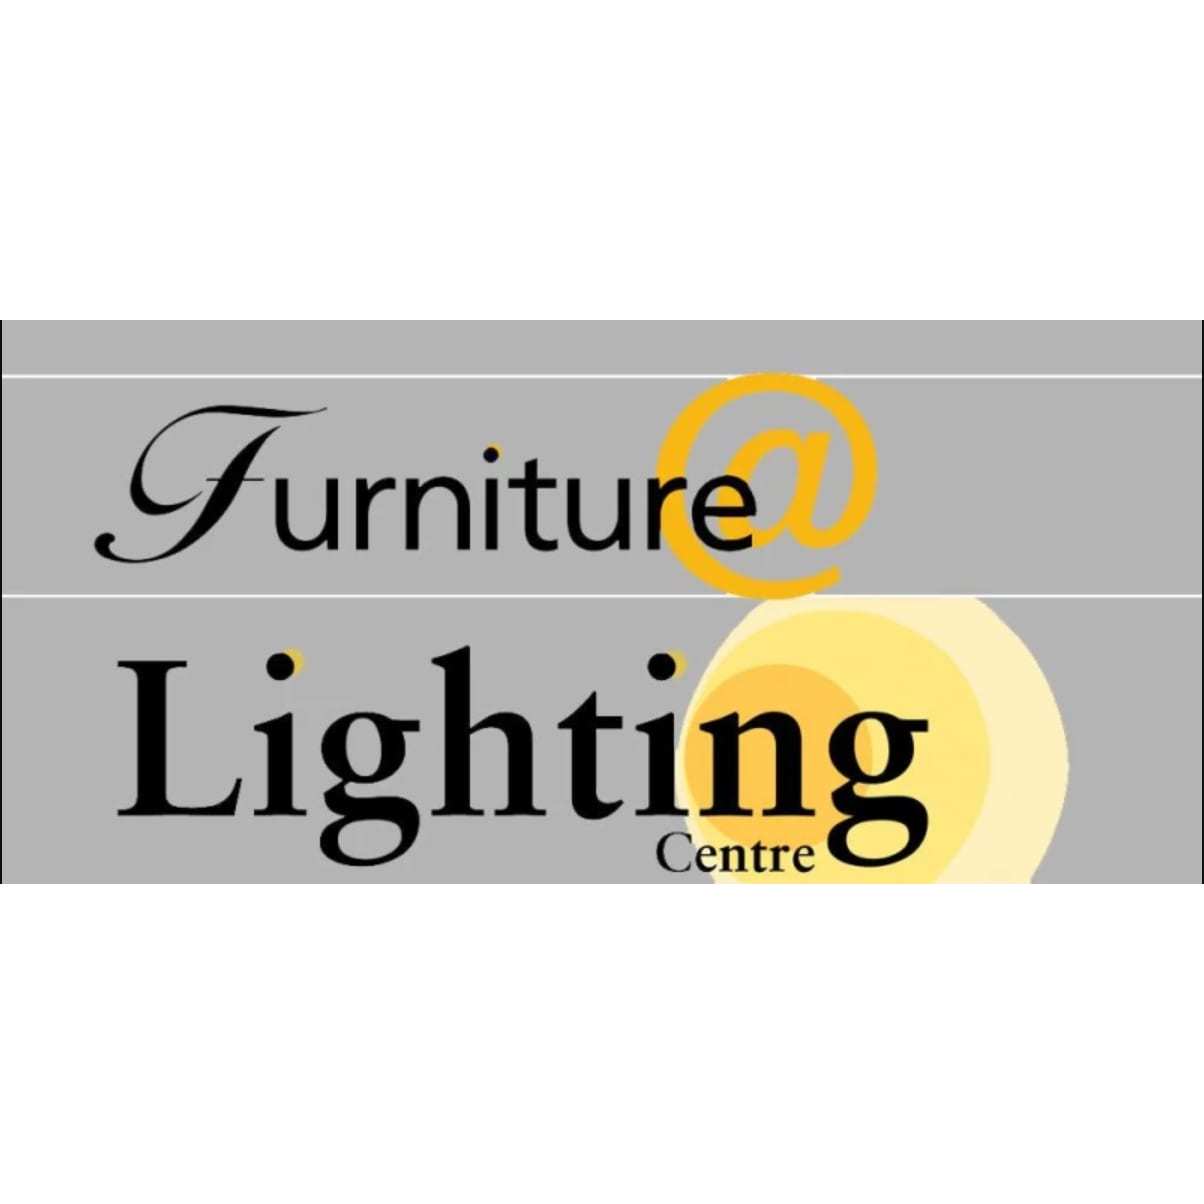 Furniture at the Lighting Centre - Tonbridge, Kent TN9 1SW - 01732 363583 | ShowMeLocal.com